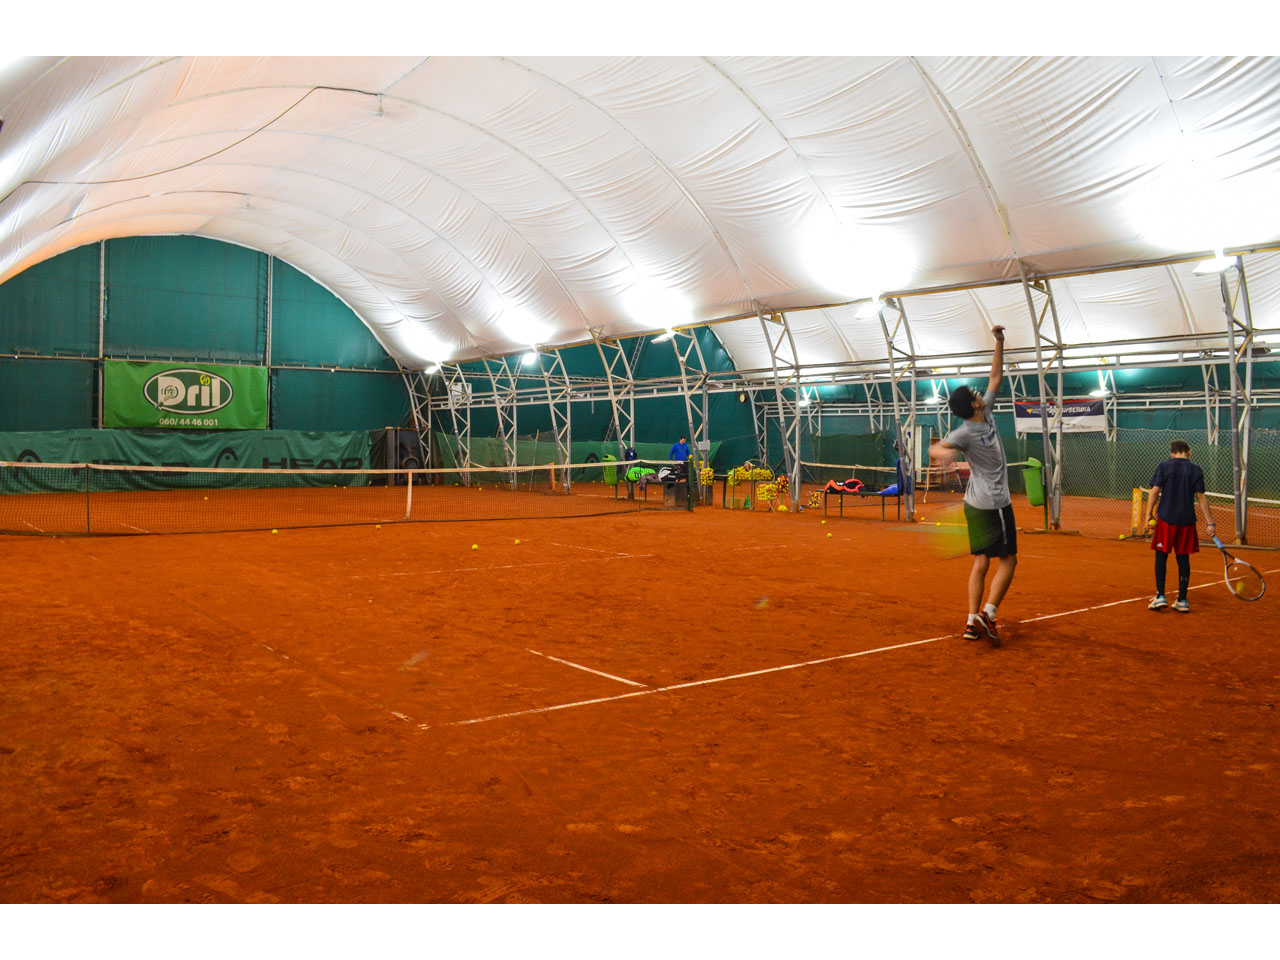 TENISKI KLUB DRIL Teniski klubovi, teniski tereni, škole tenisa Beograd - Slika 5